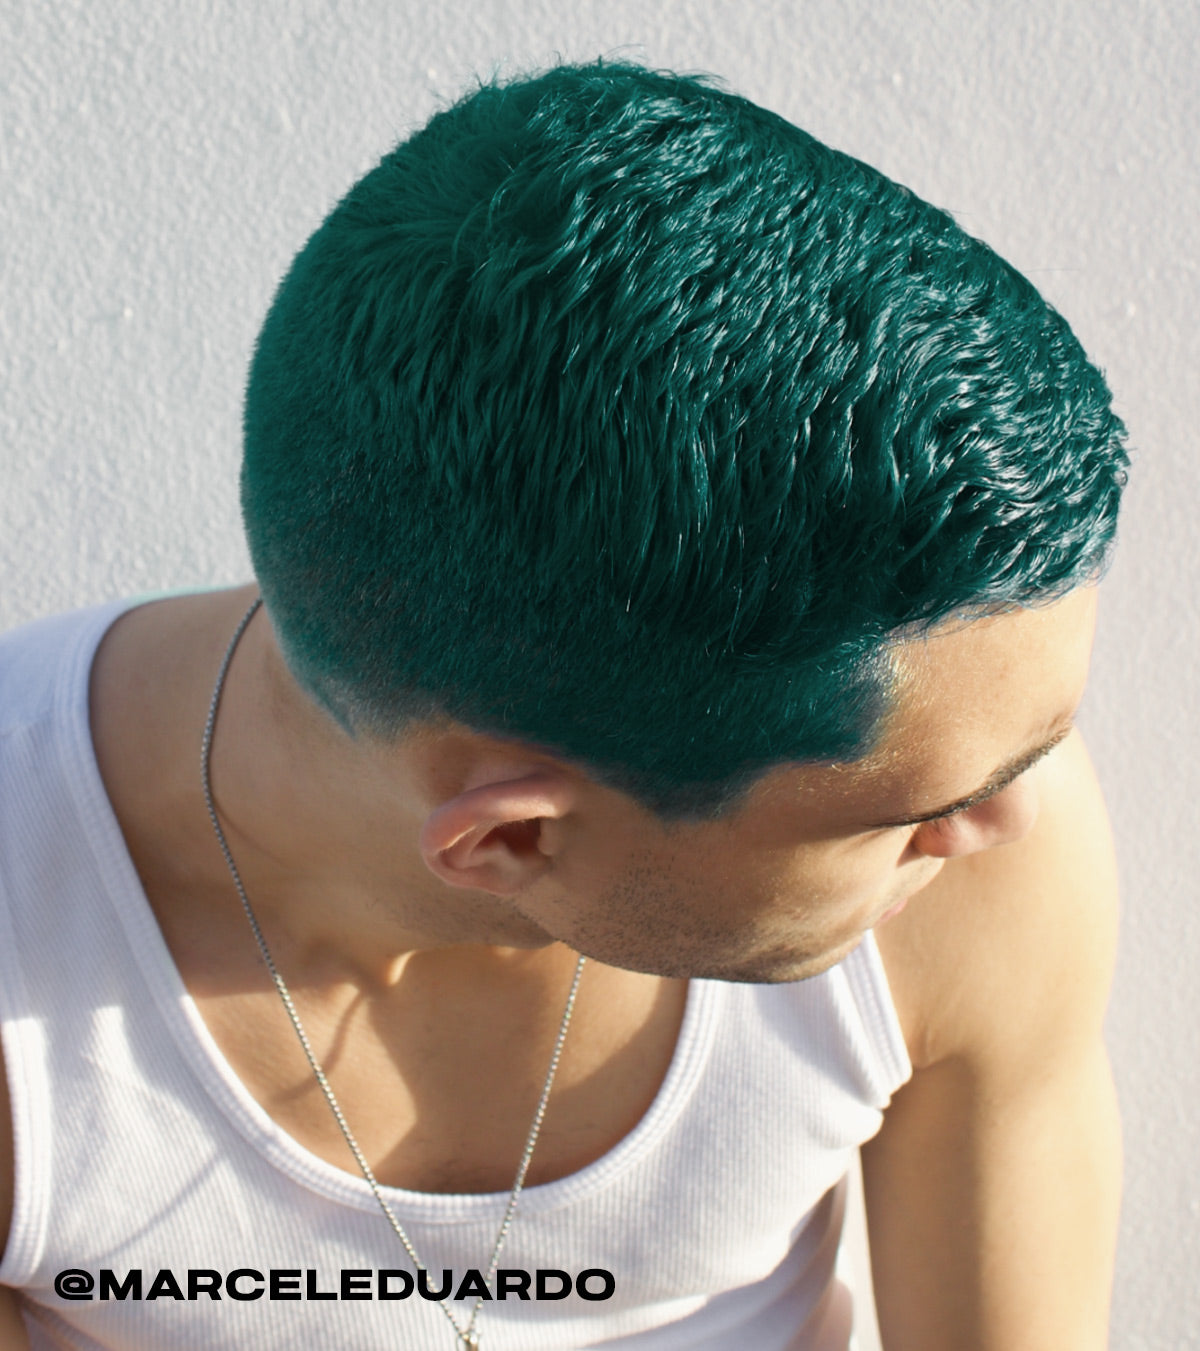 Selfie of model @melissa_gandarinho after using Emerald Green mix it up duo set on their hair